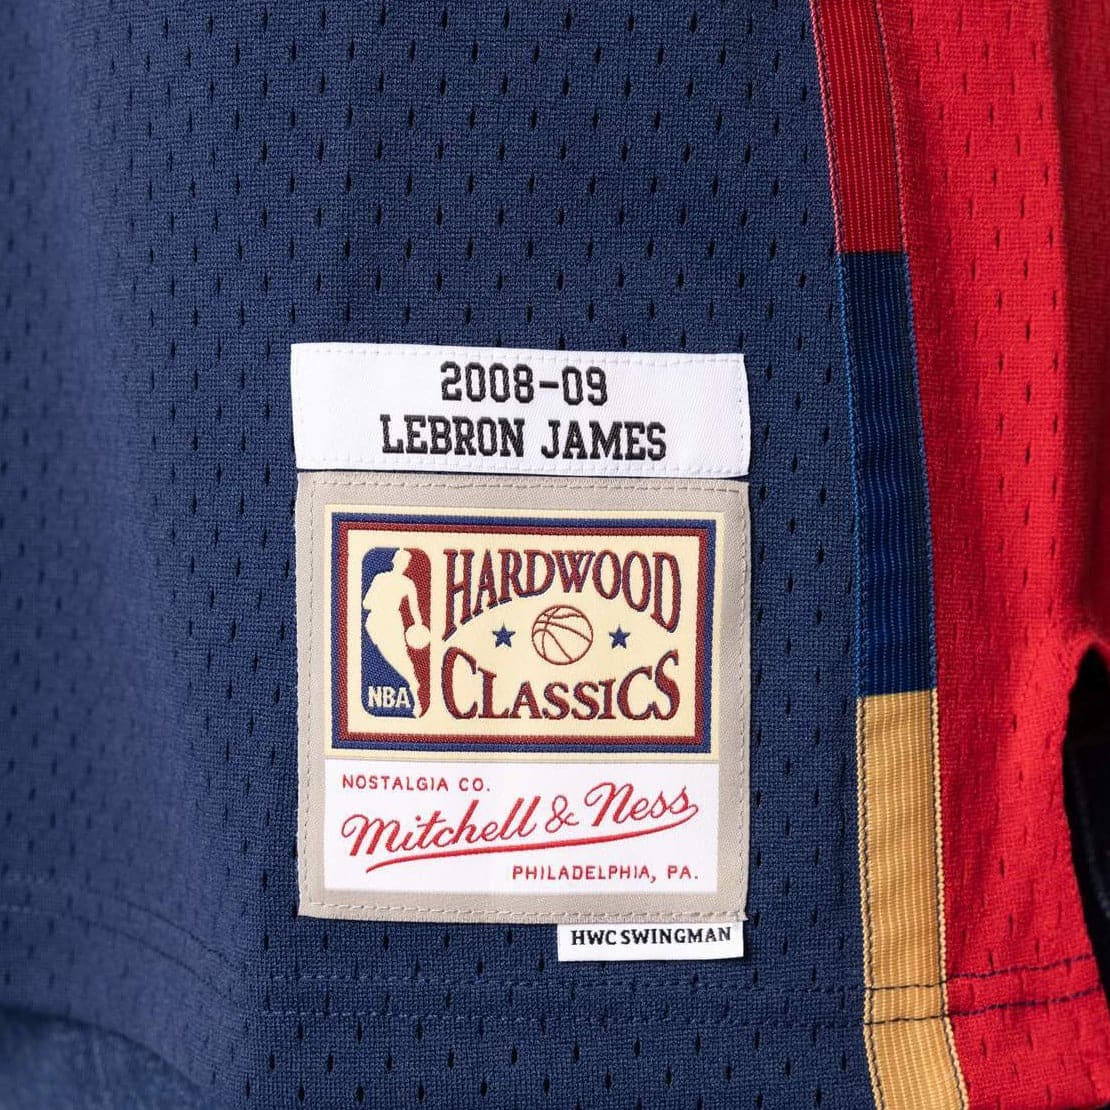 LeBron James 08-09 Cleveland Cavaliers Hardwood Classic Swingman